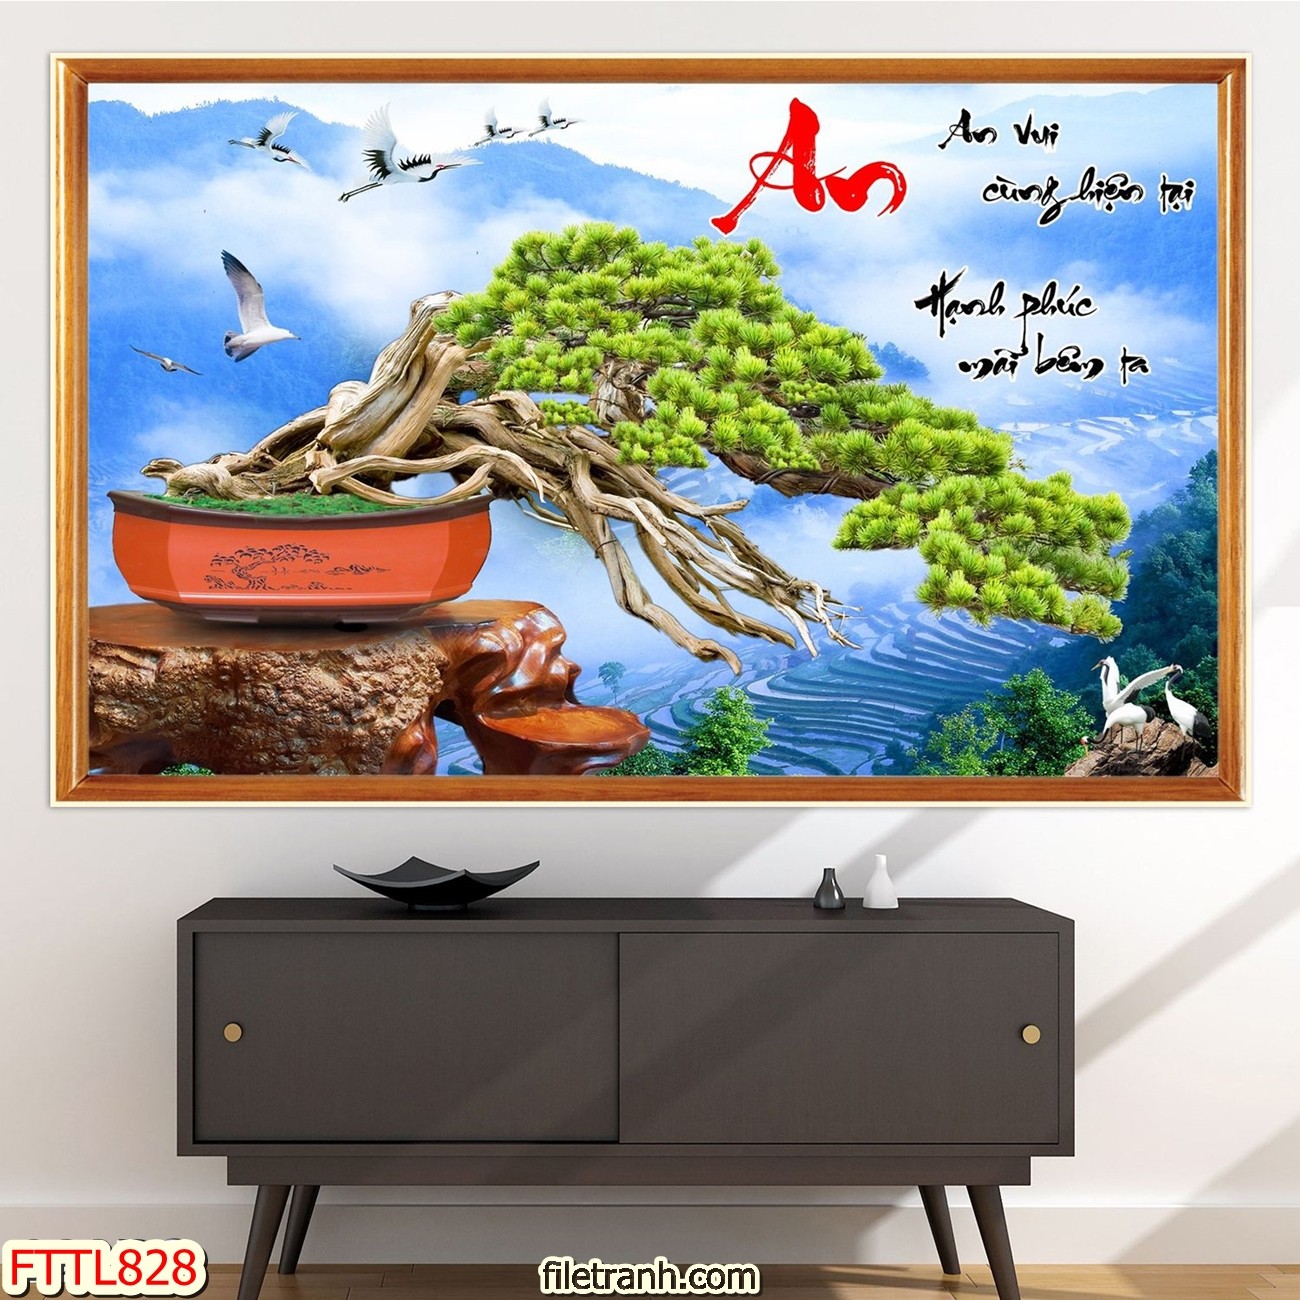 https://filetranh.com/file-tranh-chau-mai-bonsai/file-tranh-chau-mai-bonsai-fttl828.html